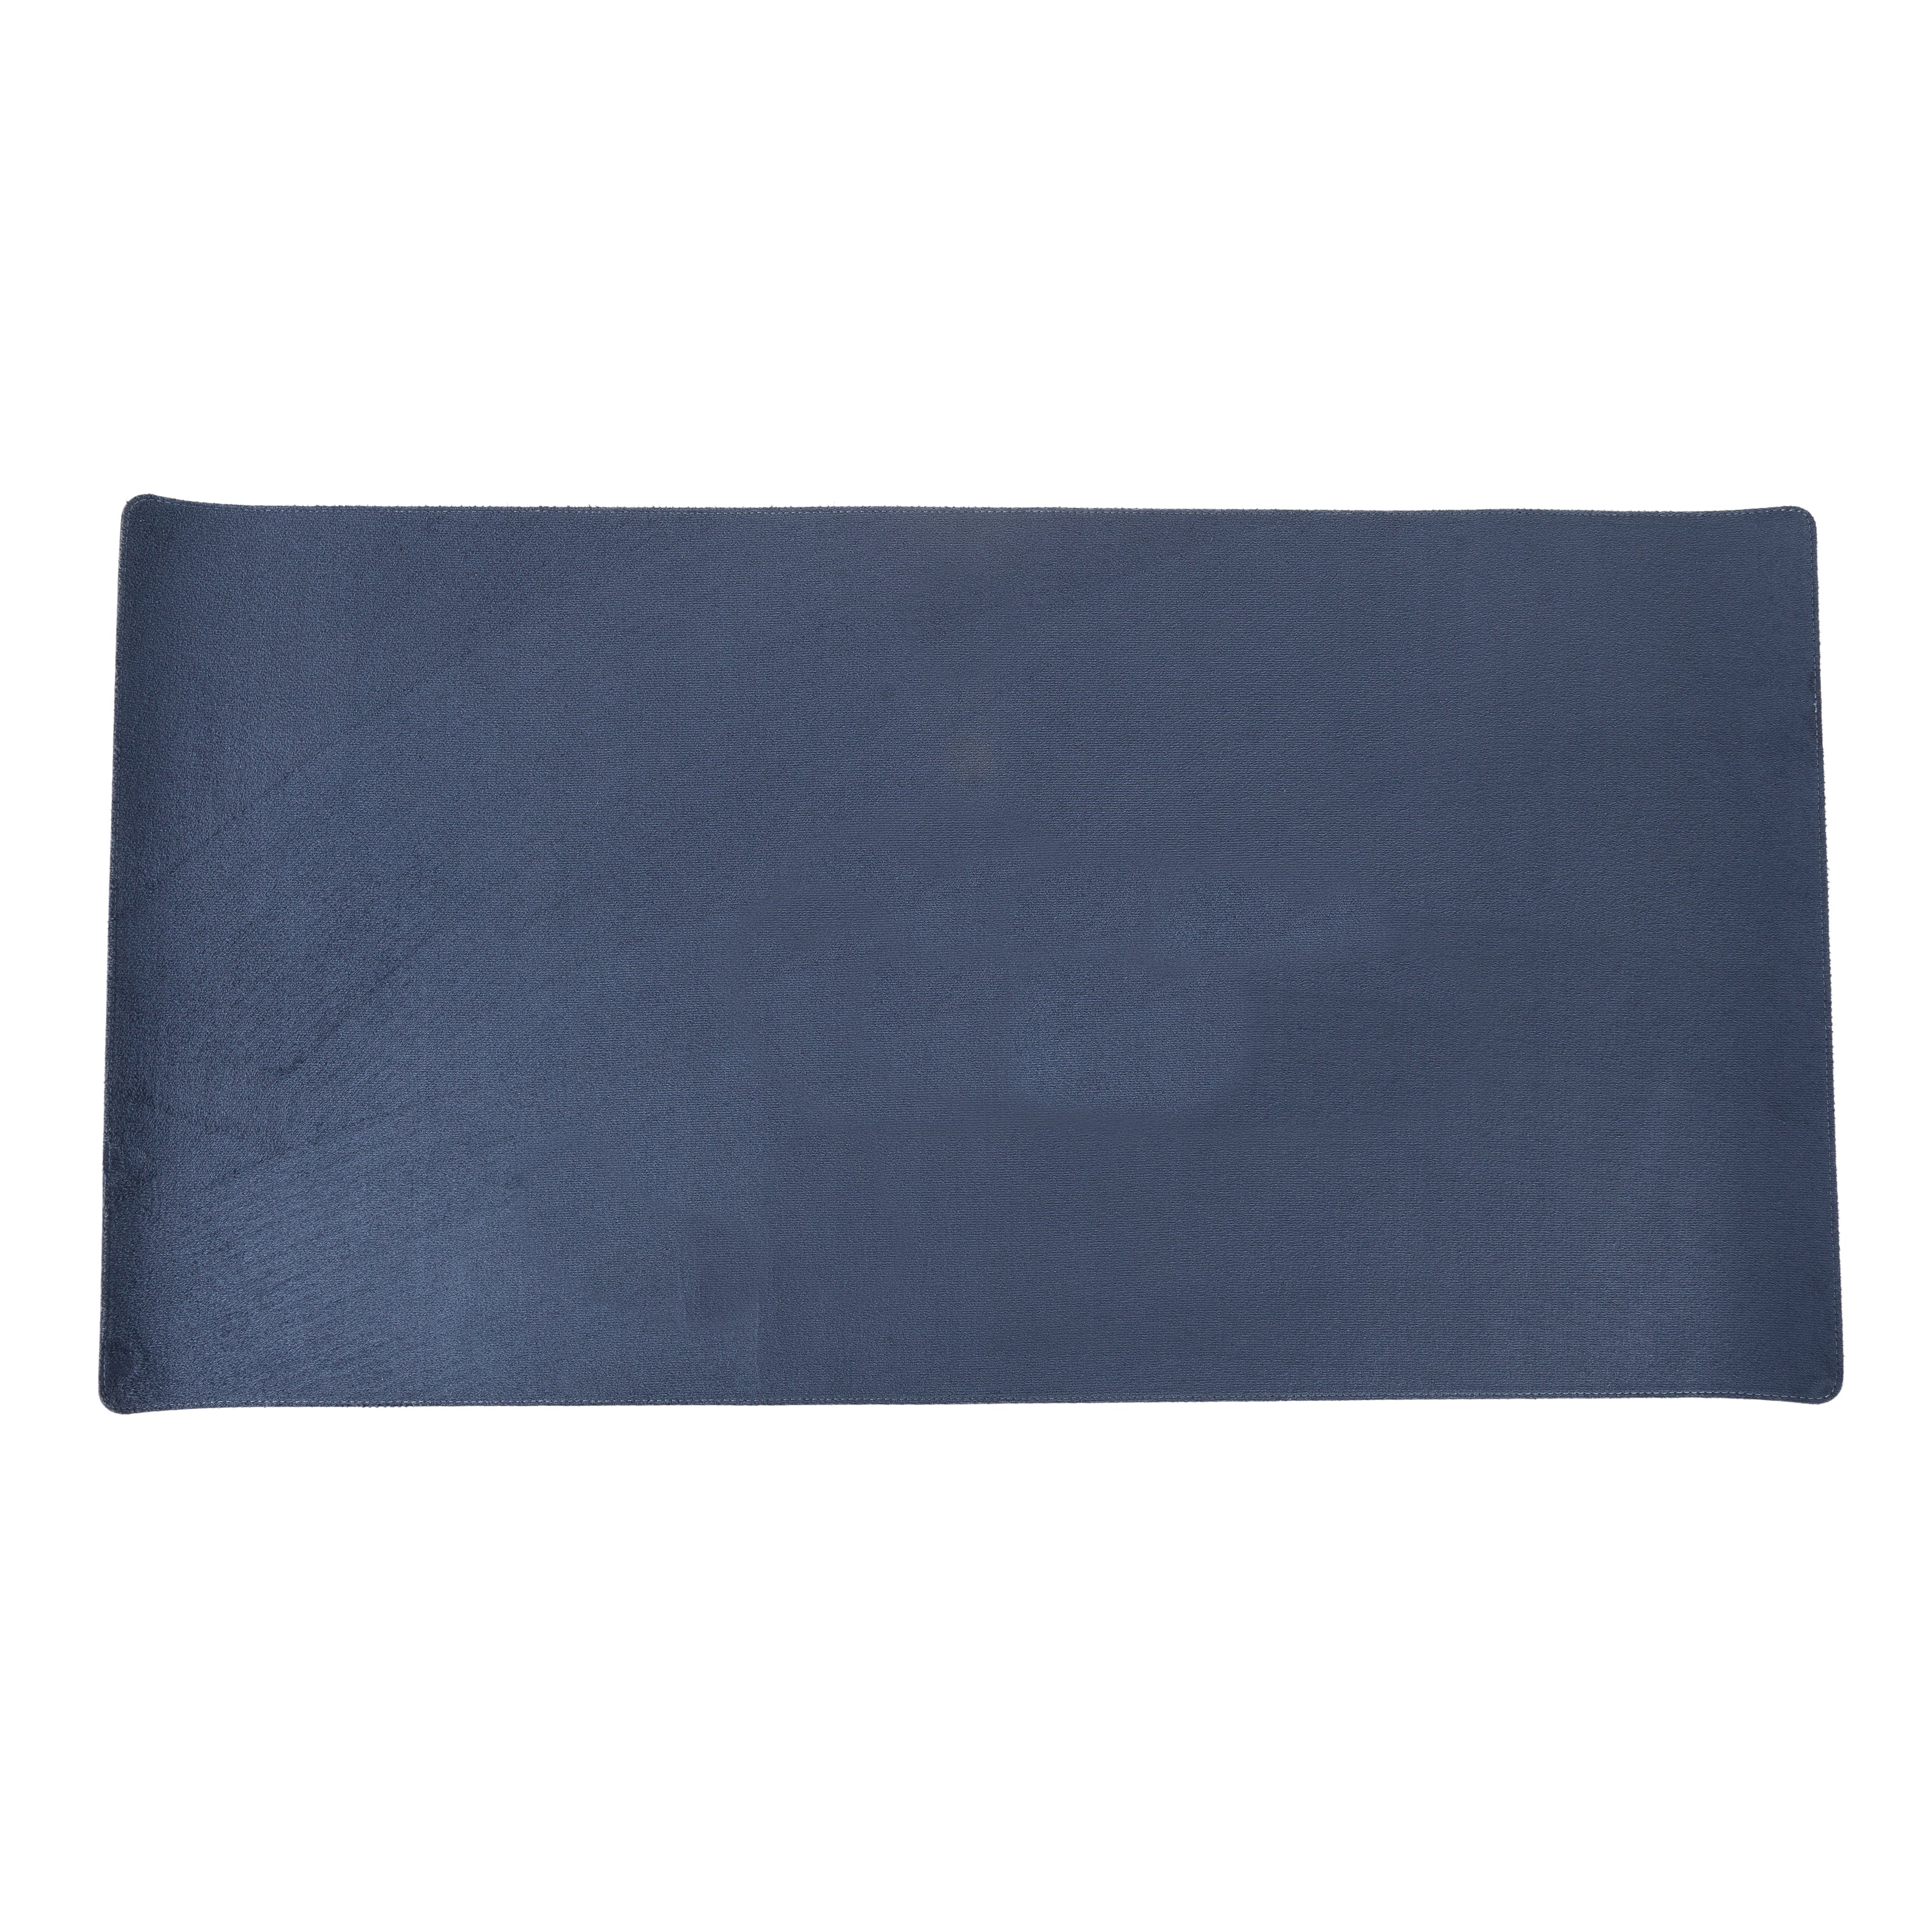 DelfiCase Genuine Blue Leather Deskmat, Computer Pad, Office Desk Pad 4